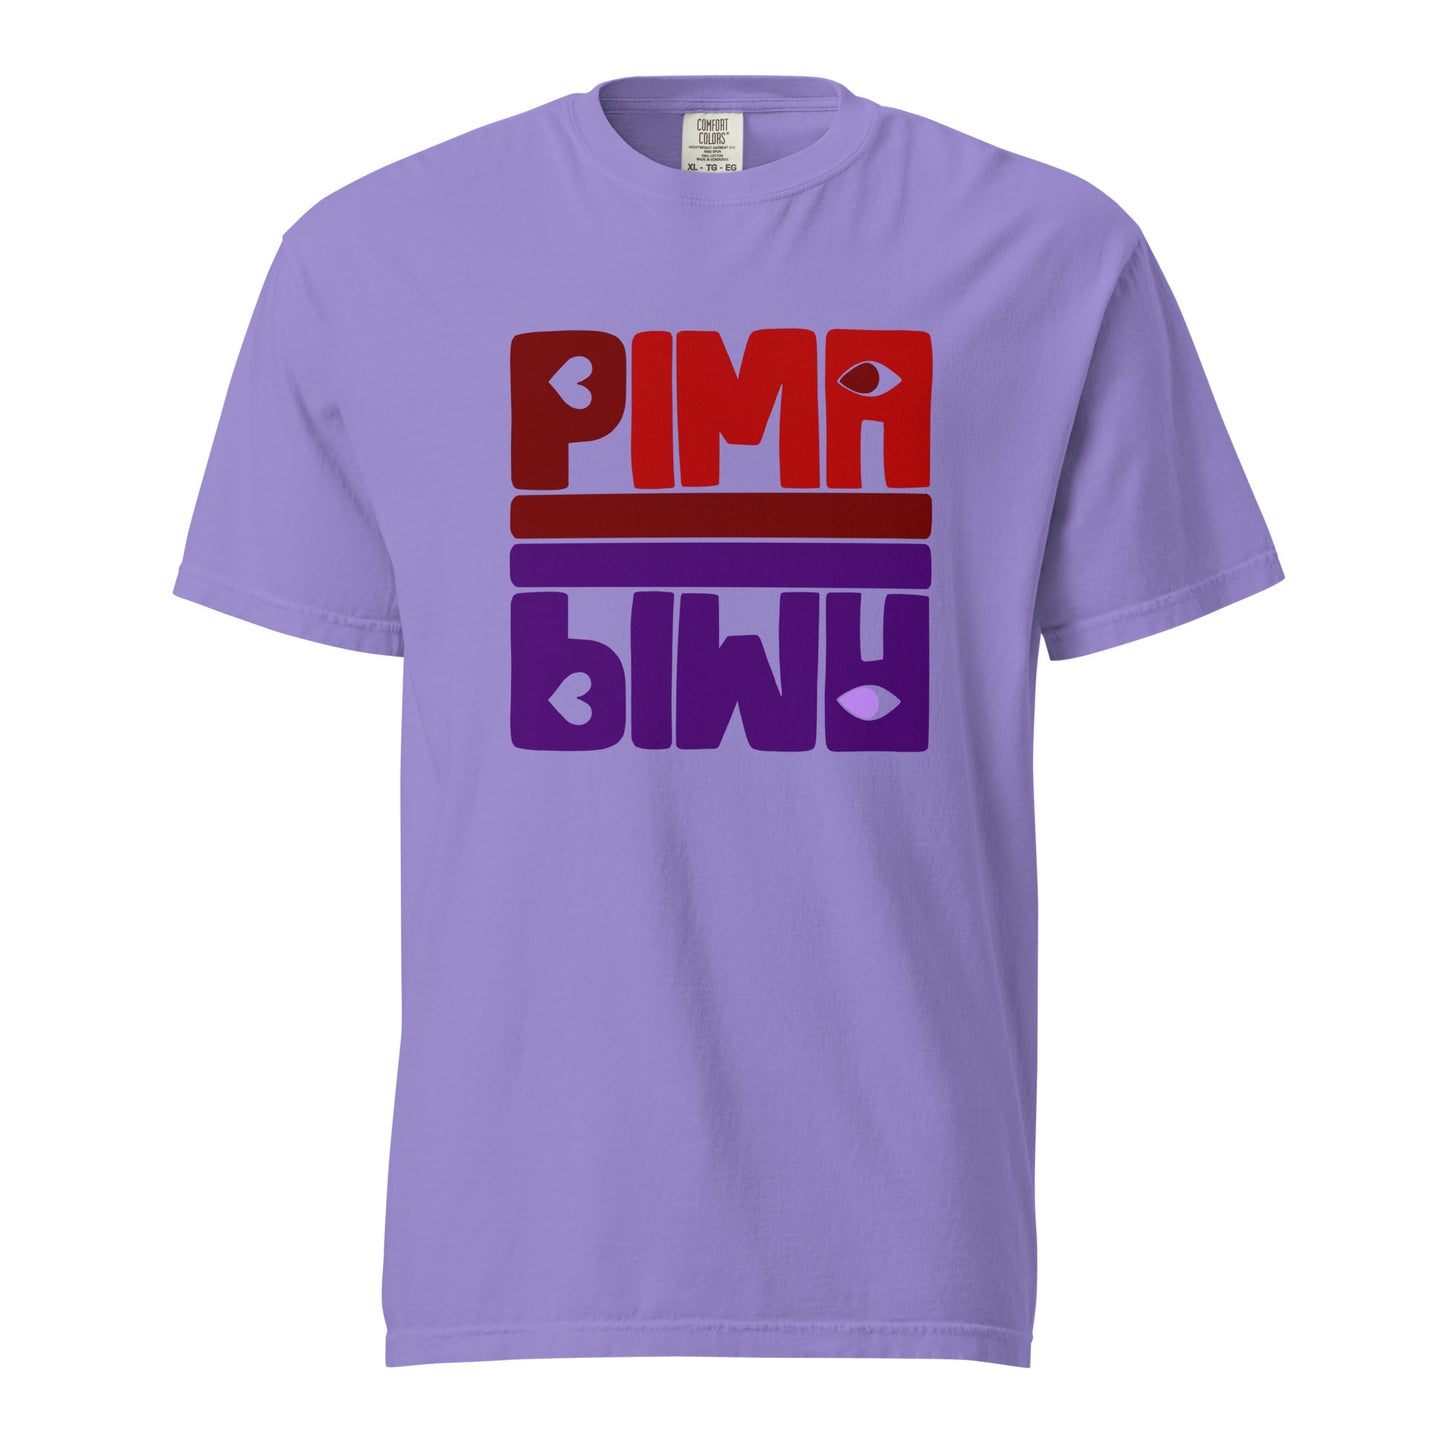 PIMA AMIP red & purple shirt - various colors